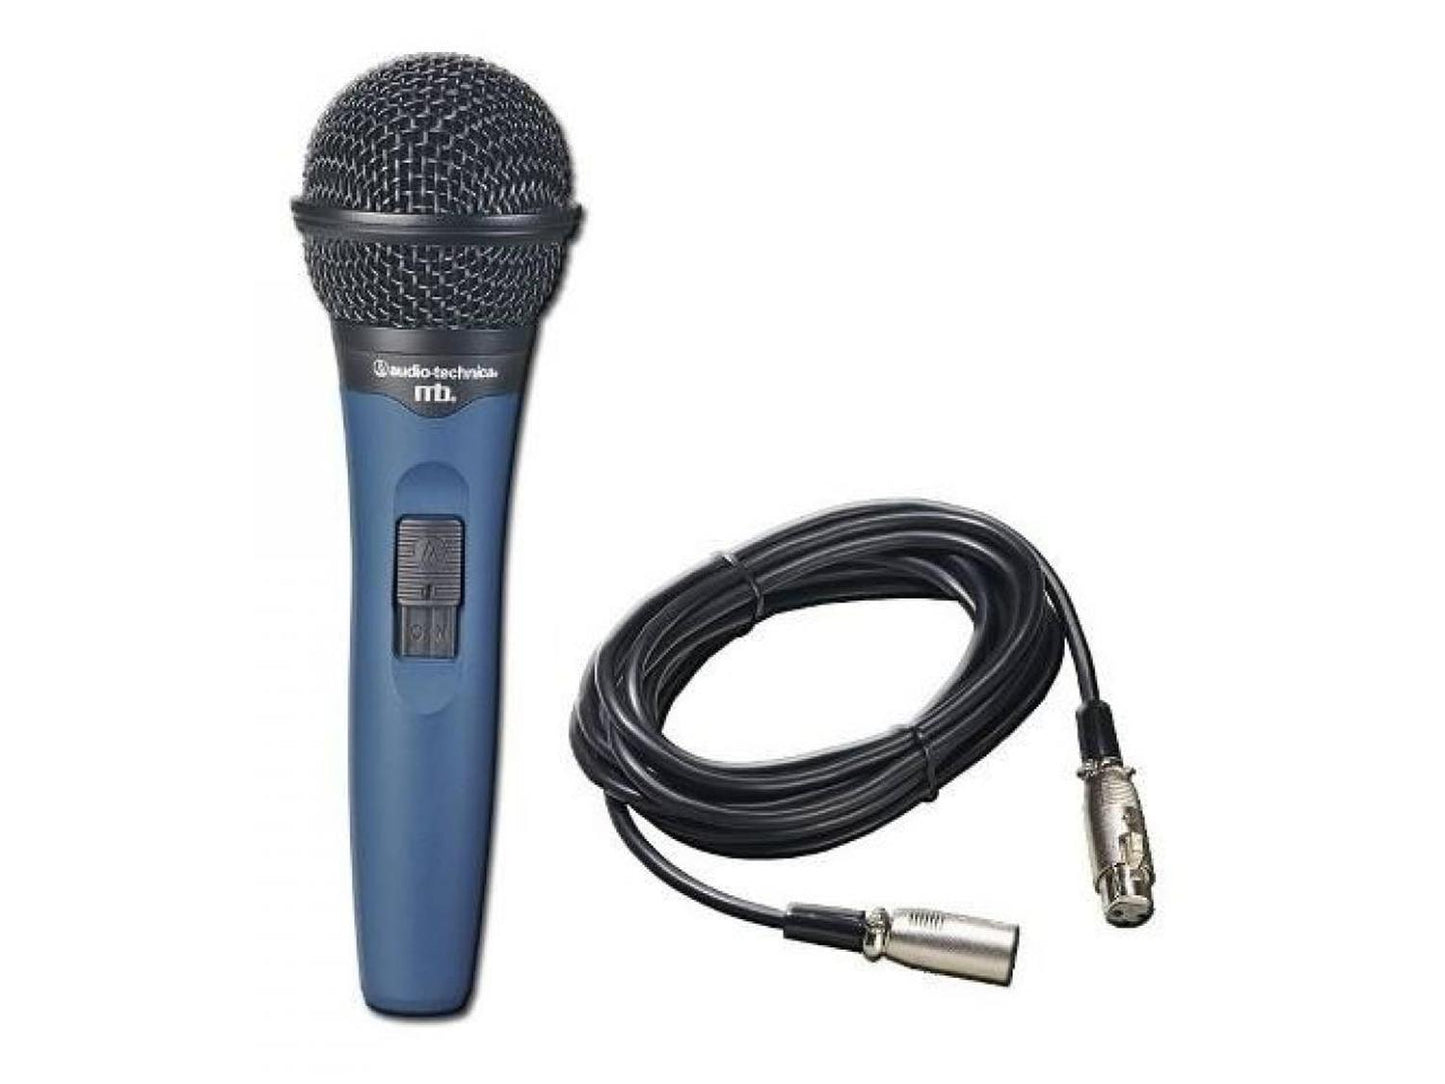 Micrófono vocal dinámico cardioide cable MB1K-CL